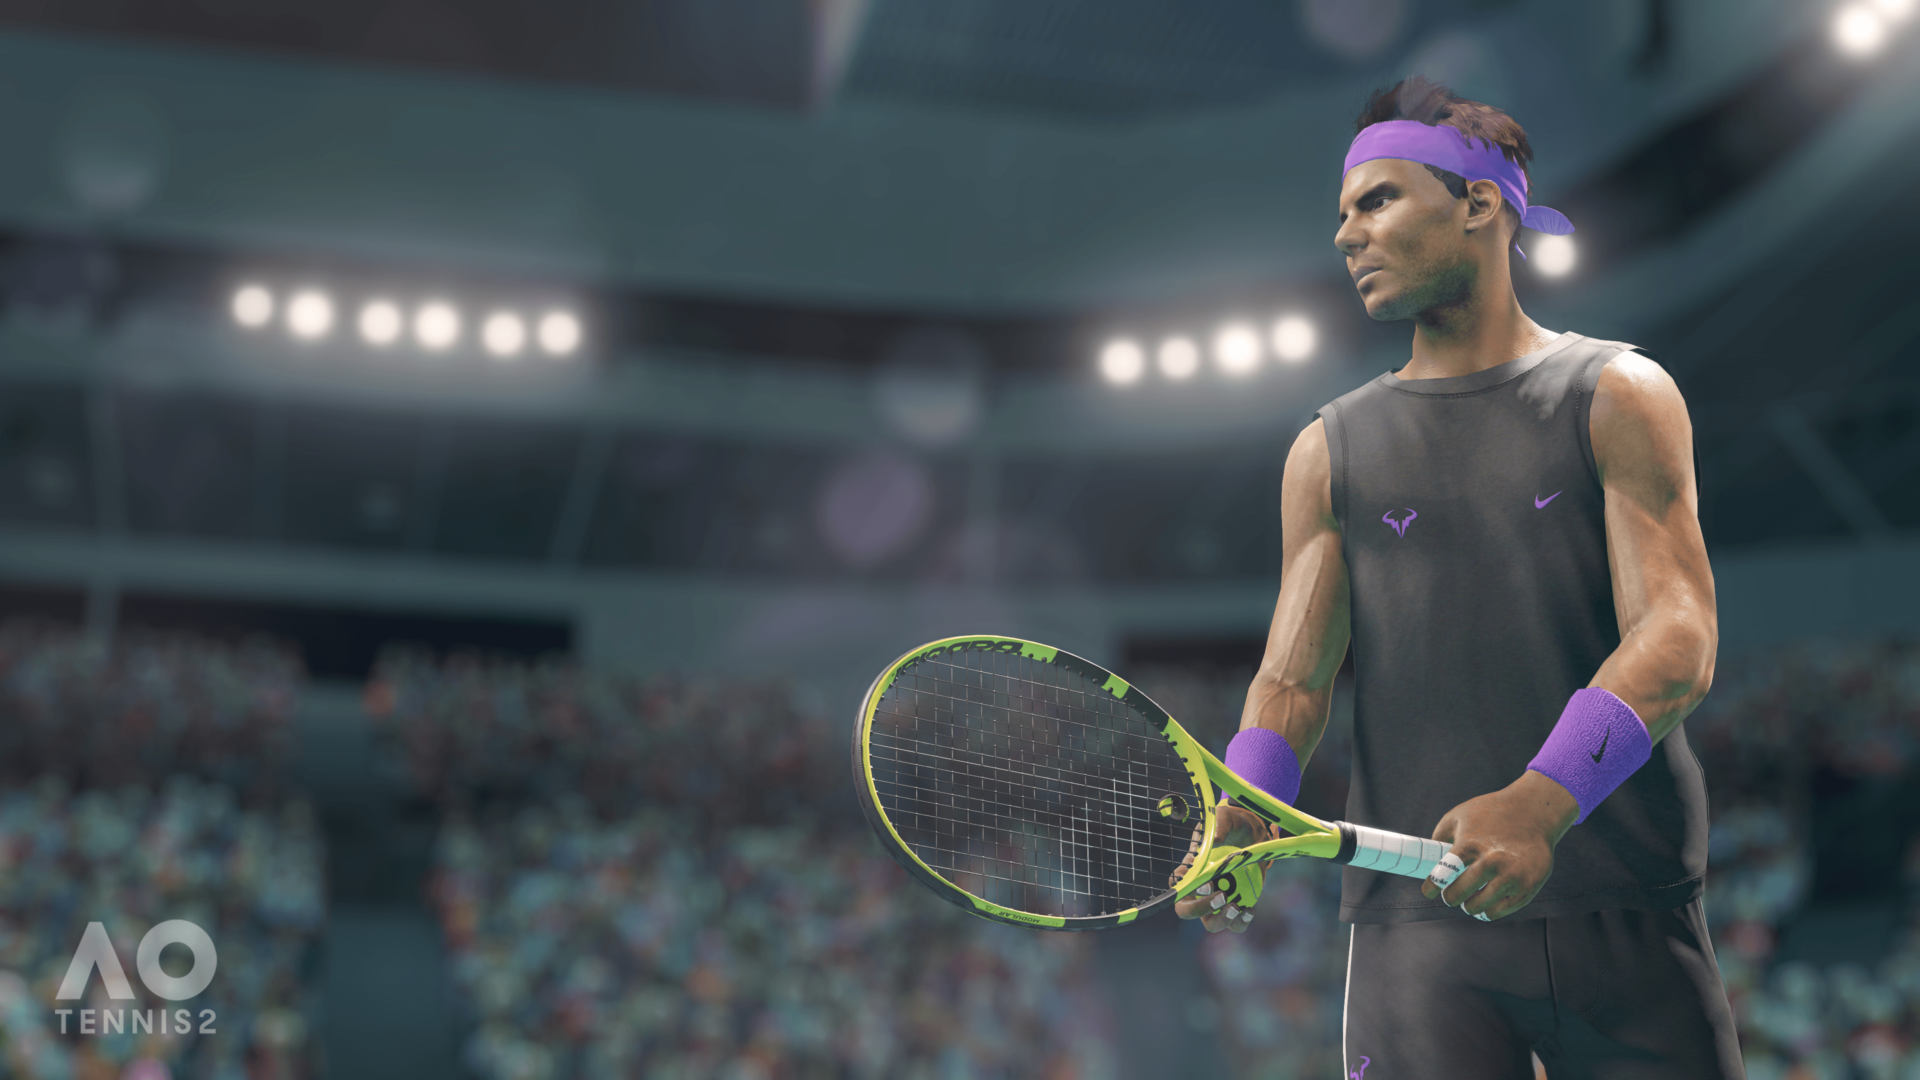 AO Tennis 2 Recensione GamesVillage.it